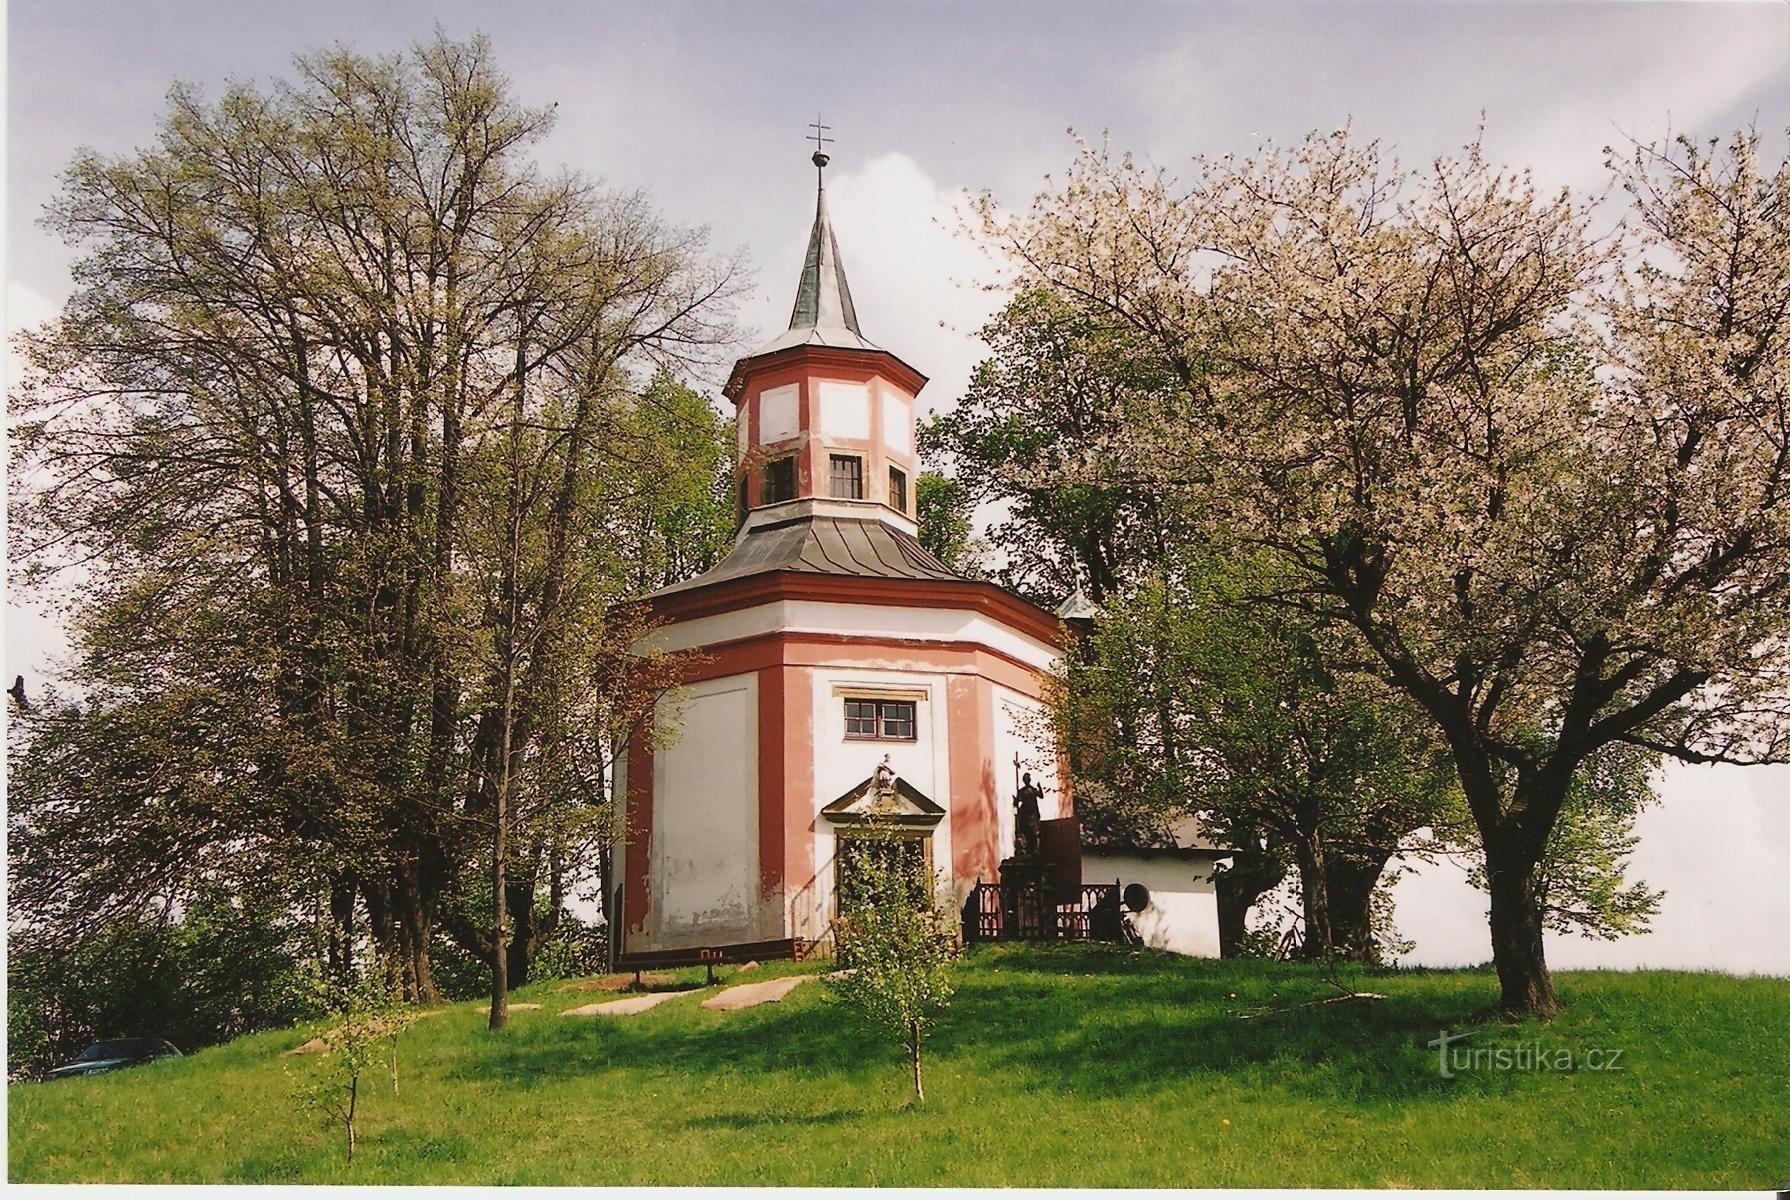 Hartmanice - Capela Sf. Jan Nepomucký